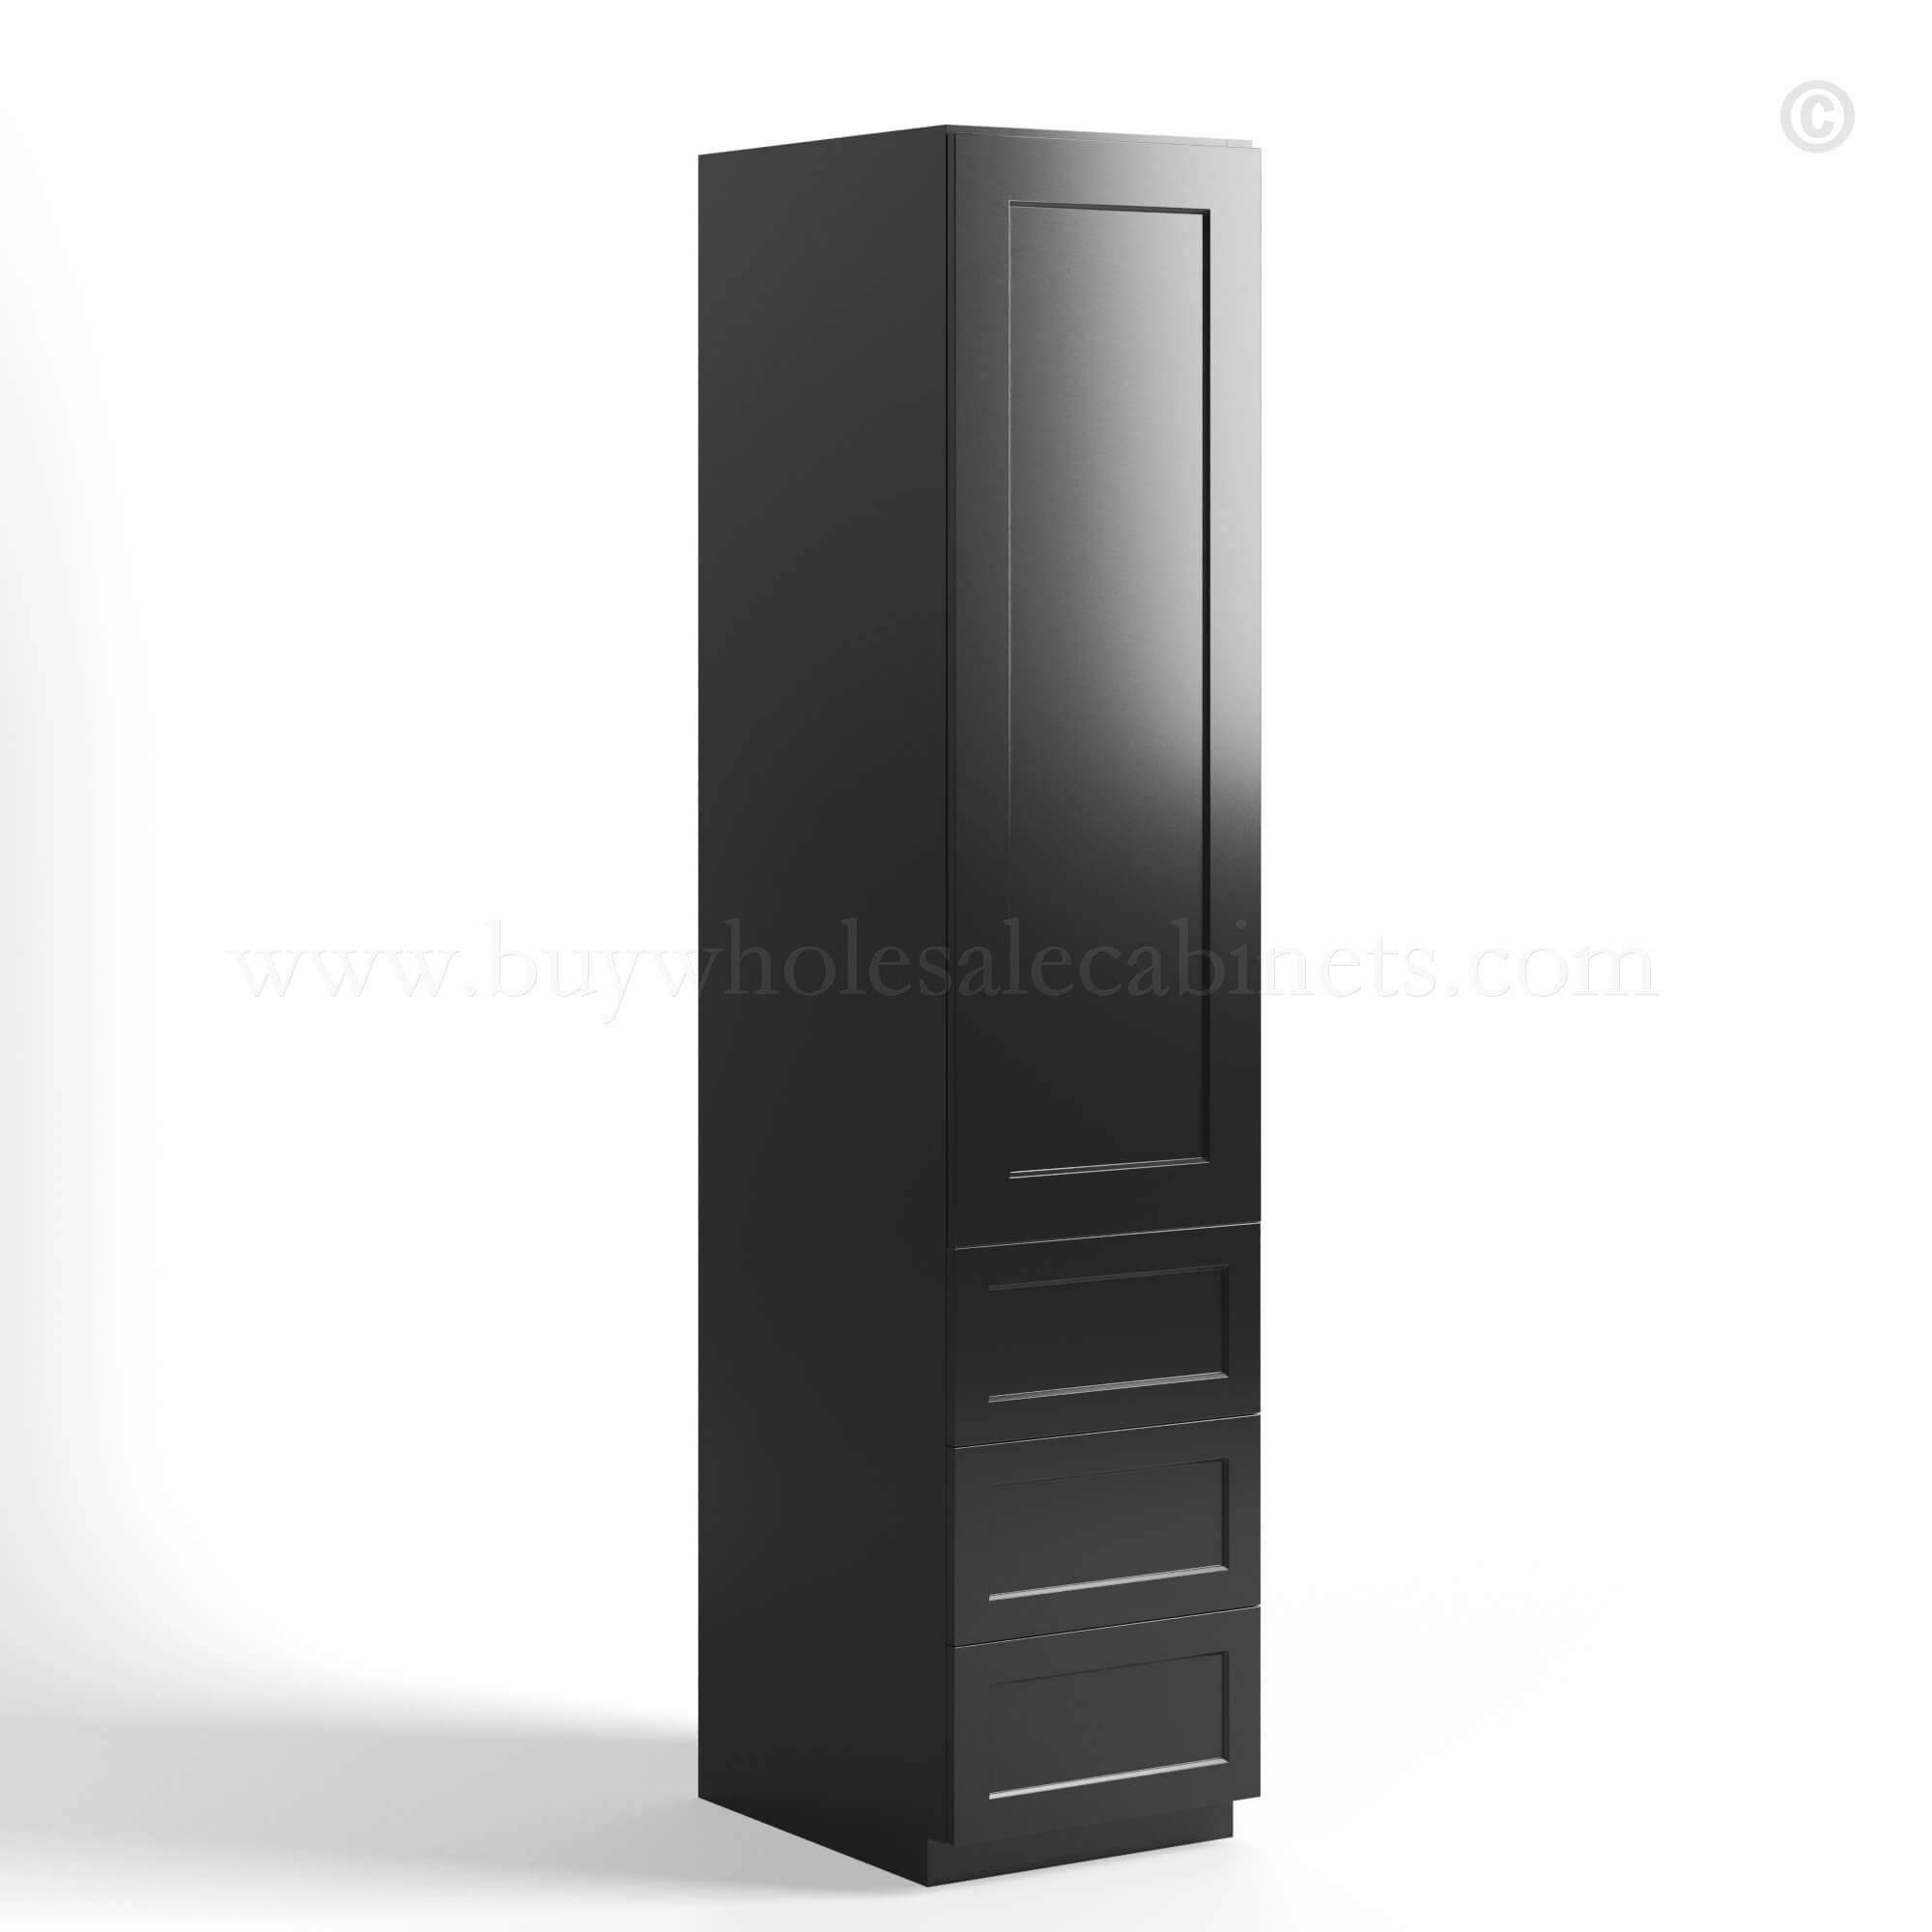 Black Shaker Vanity Linen Cabinet, rta cabinets, wholesale cabinets